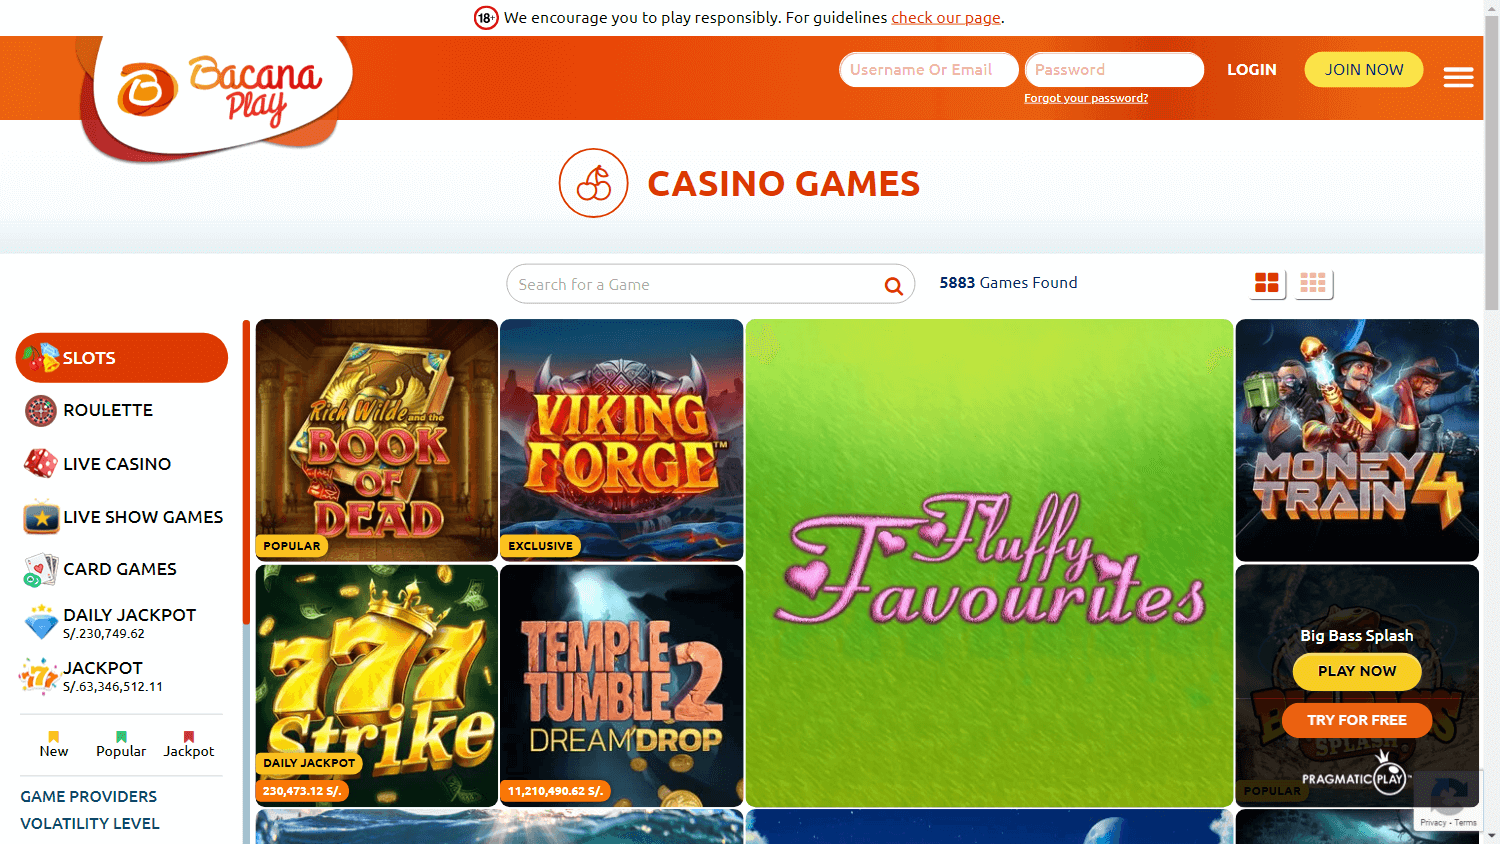 bacanaplay_casino_game_gallery_desktop